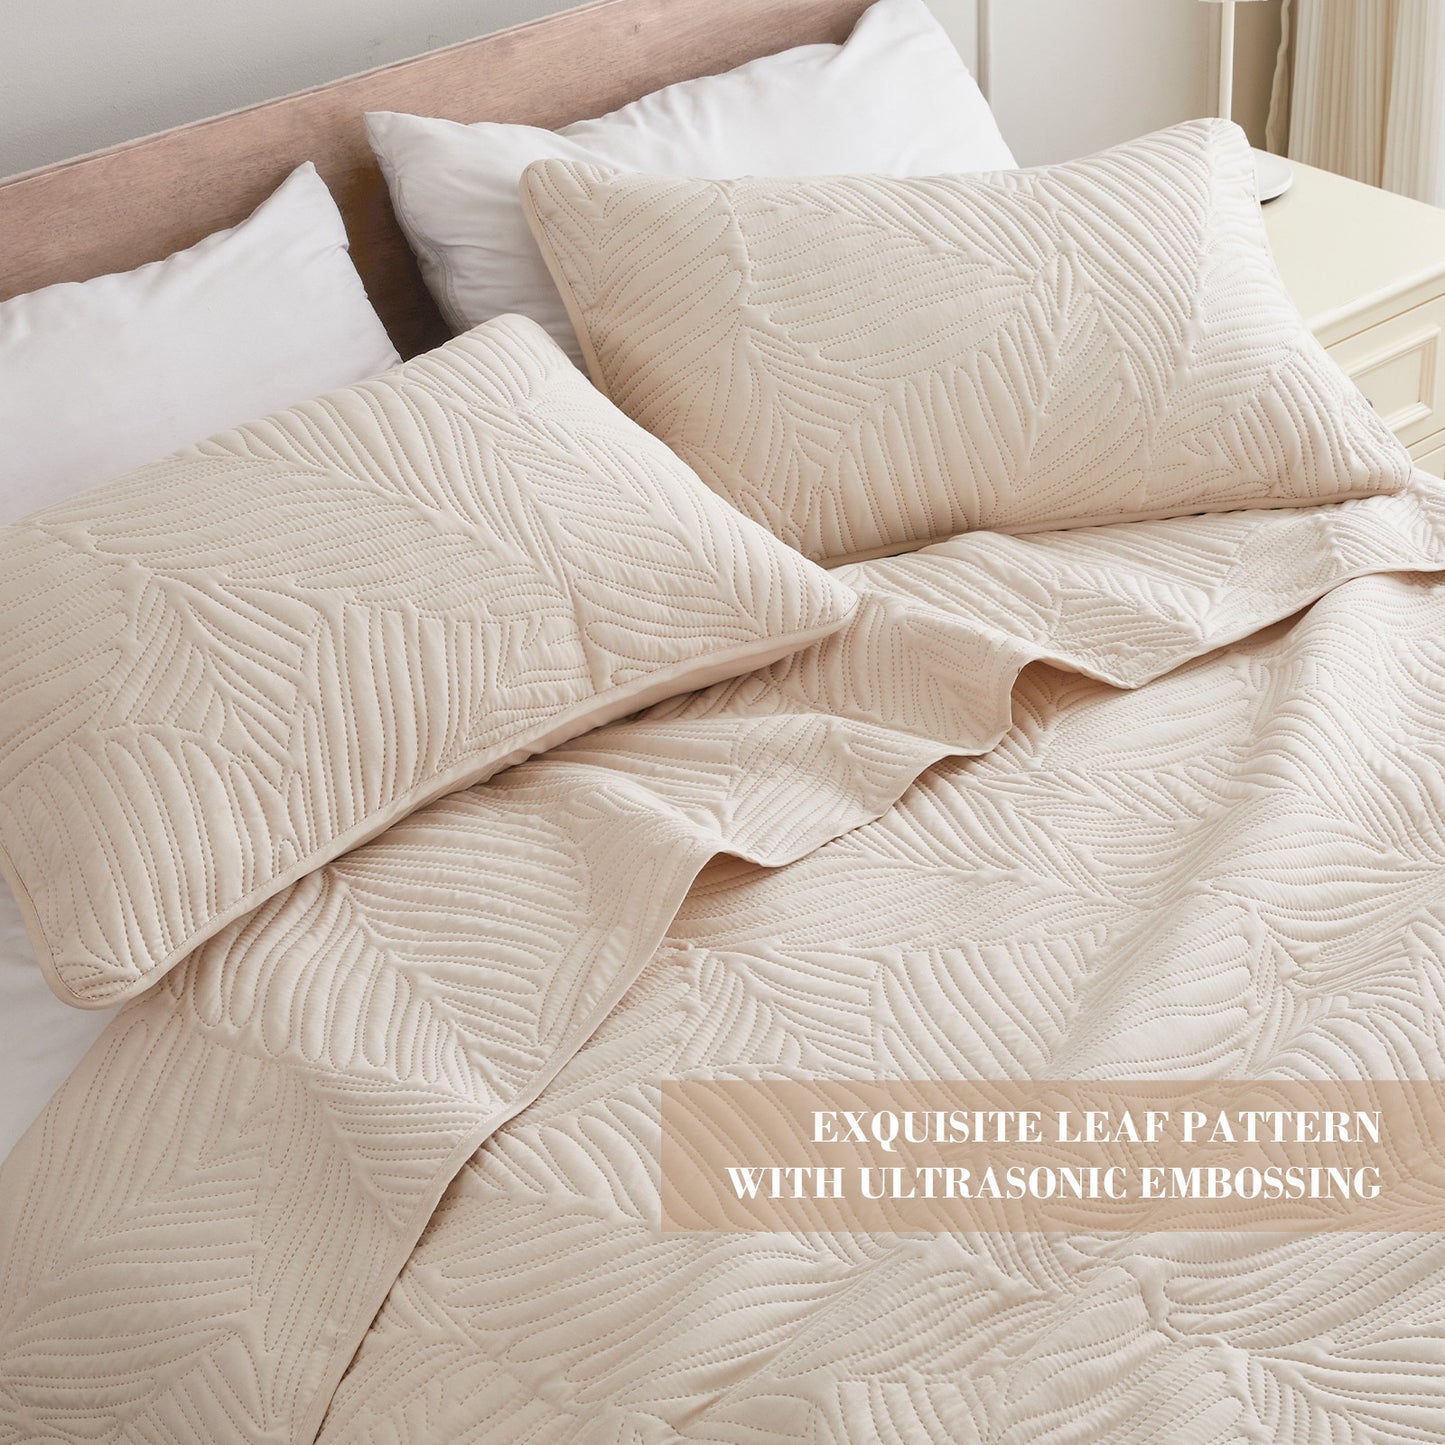 Exclusivo Mezcla Full Queen Quilt Set Brich Beige, Lightweight Bedspread Leaf Pattern Bed Cover Soft Coverlet Bedding Set(1 Quilt, 2 Pillow Shams)